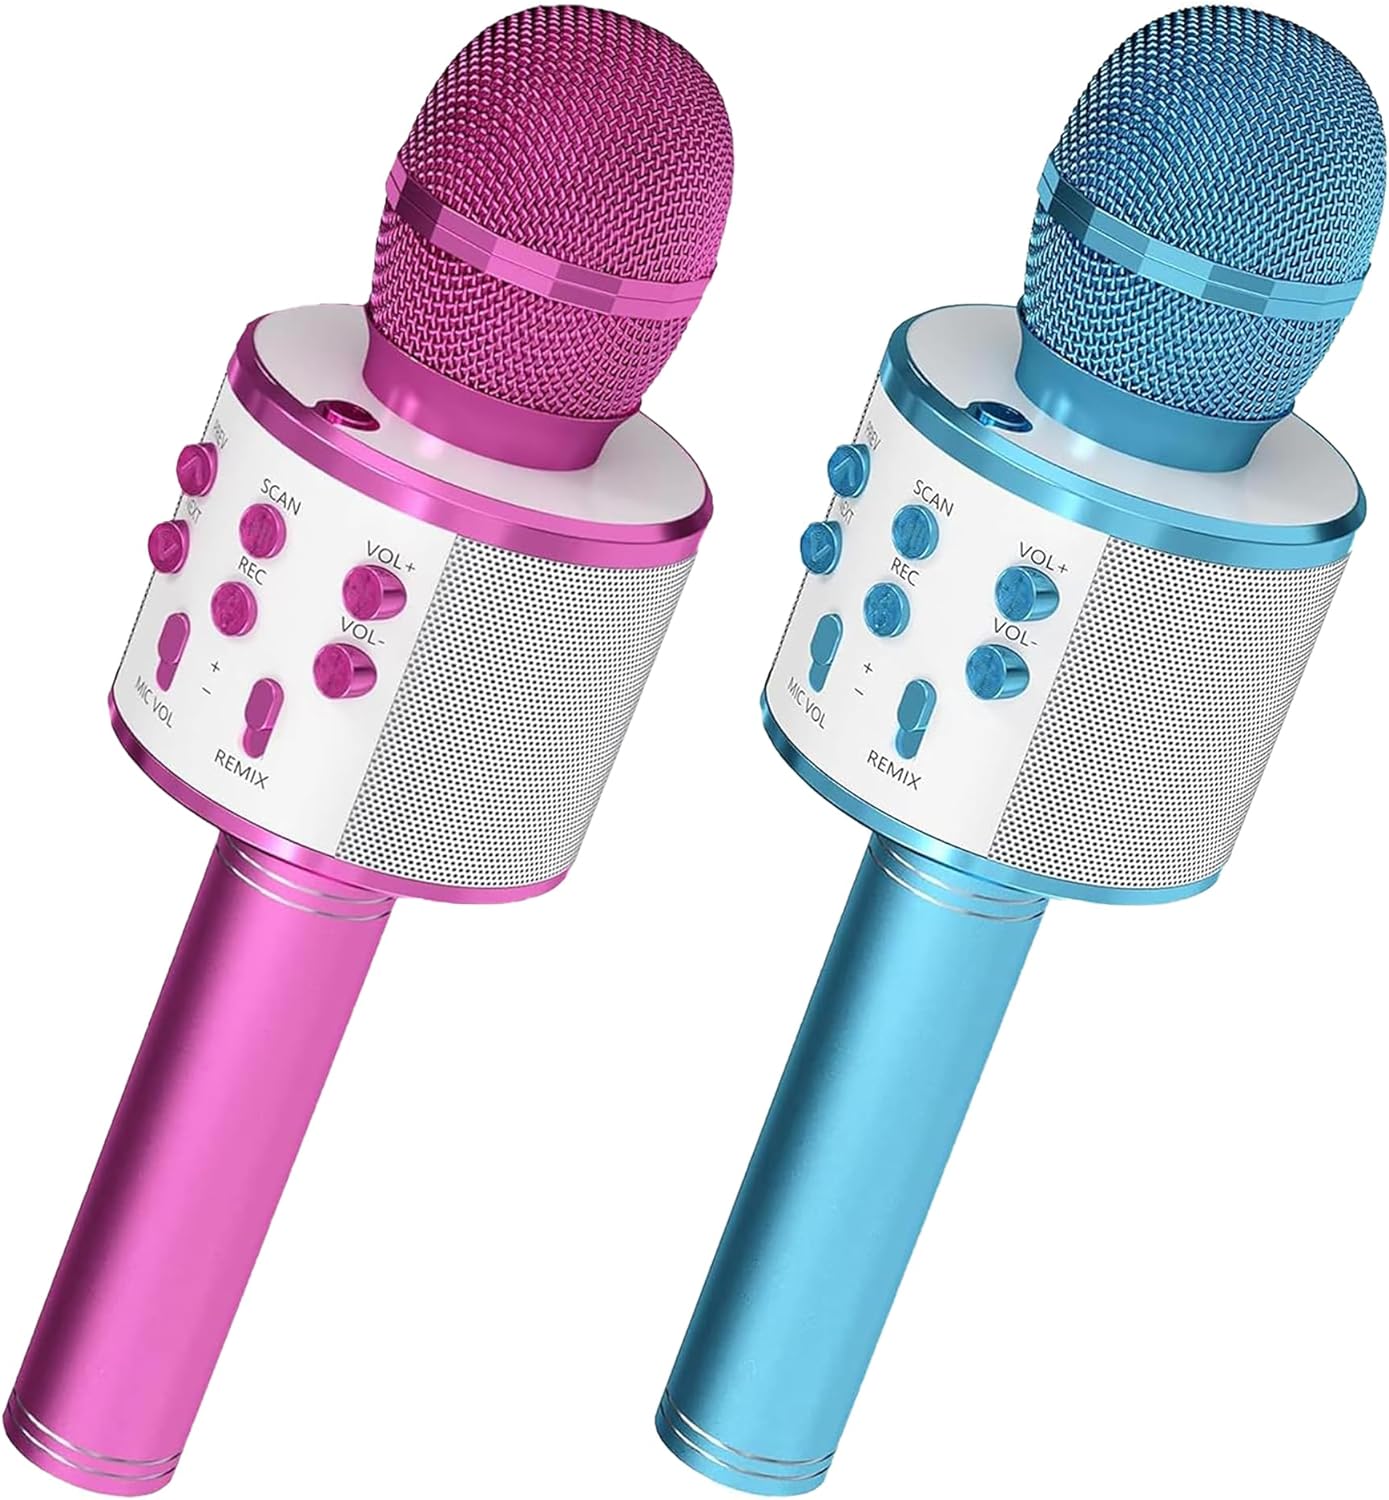 5 Core Karaoke Wireless Microphones Microfono Inalambrico Toy w Stereo Speaker SD Card & USB Playback 2Pcs Pink & Blue